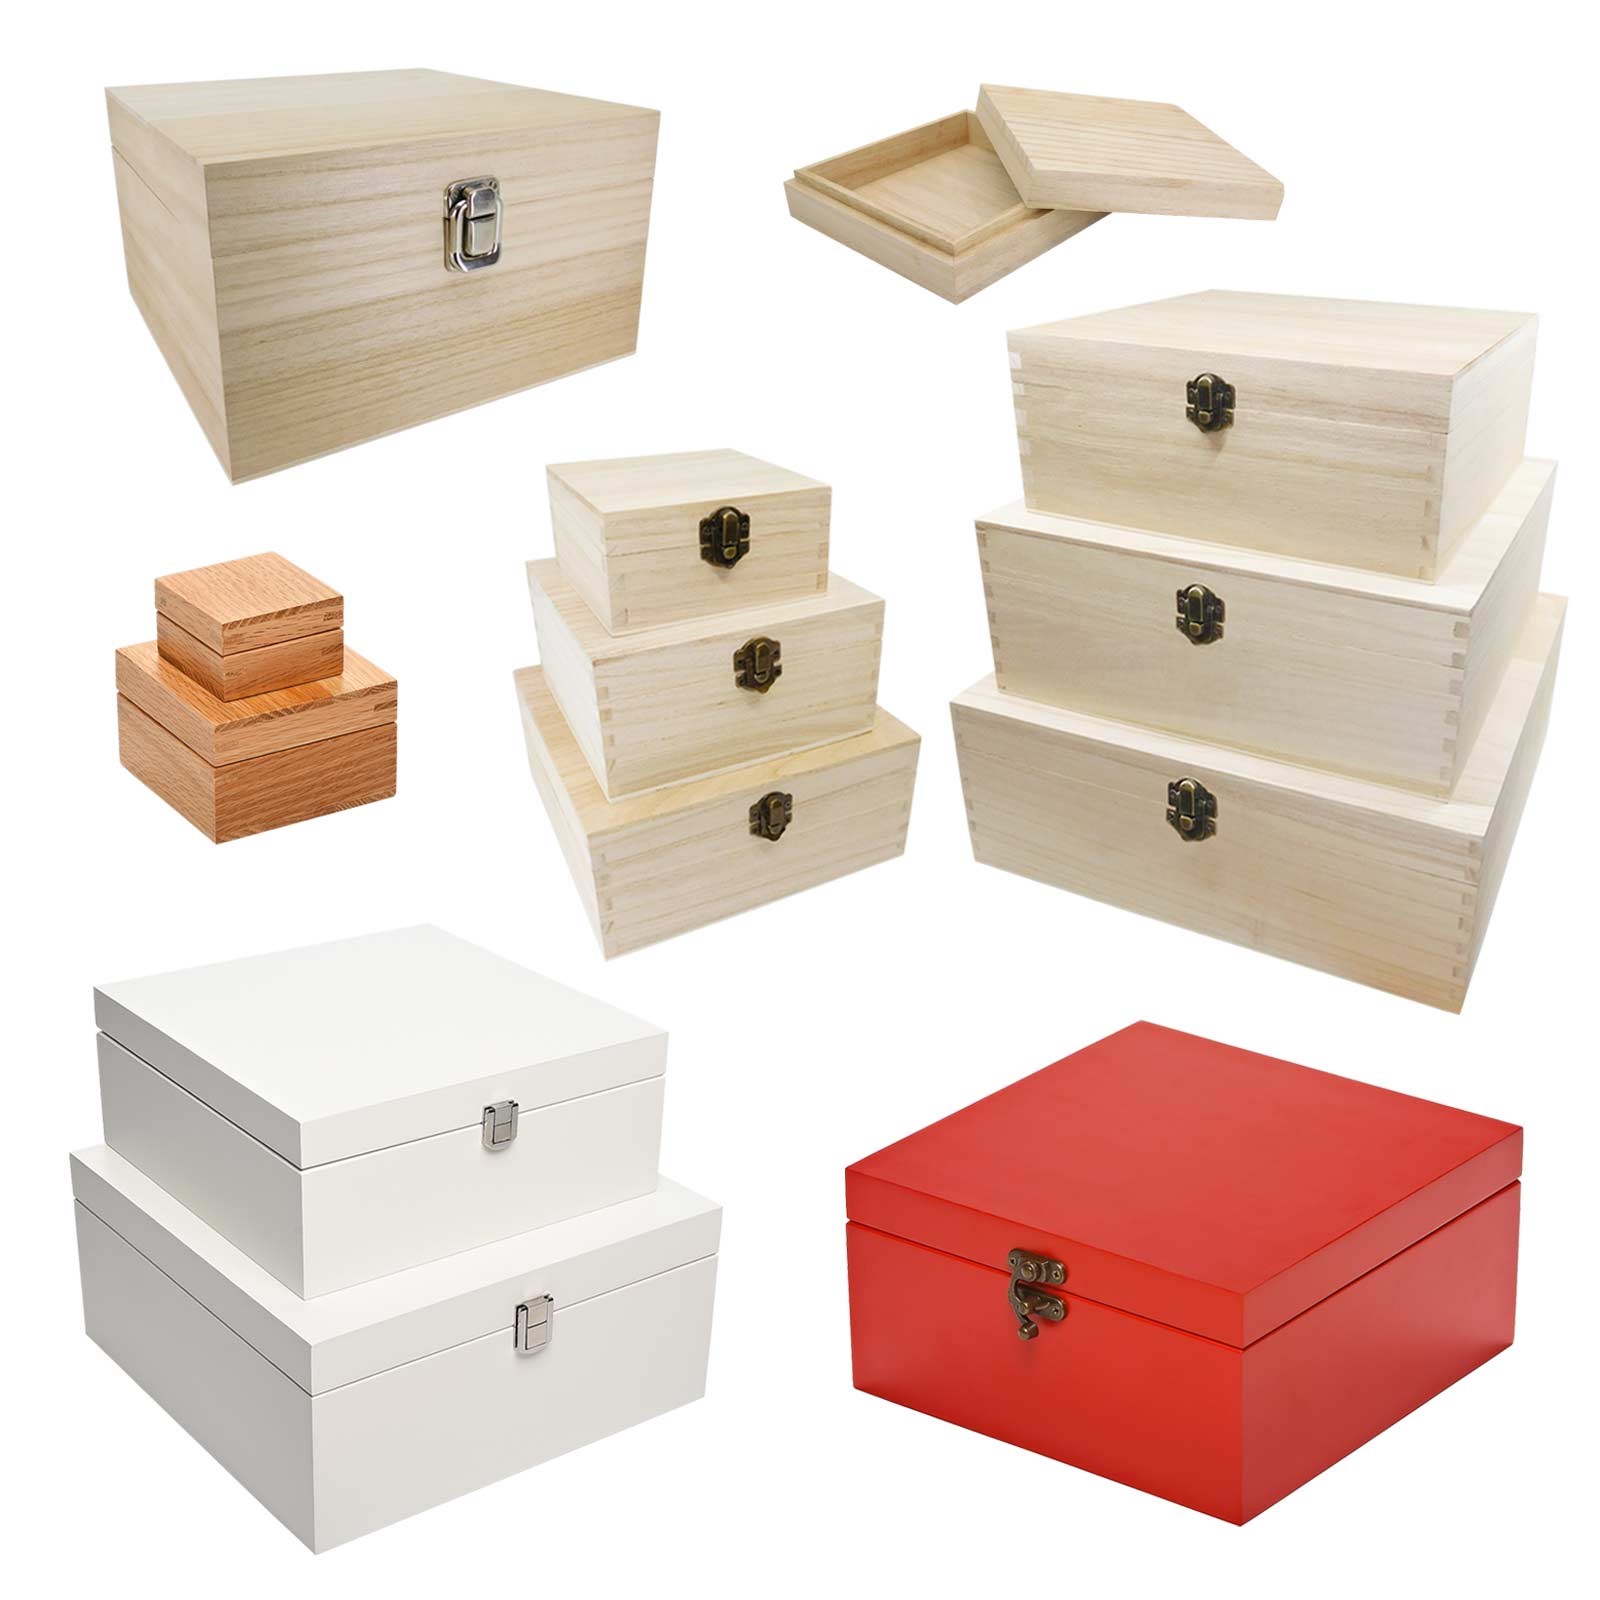 square wooden storage box